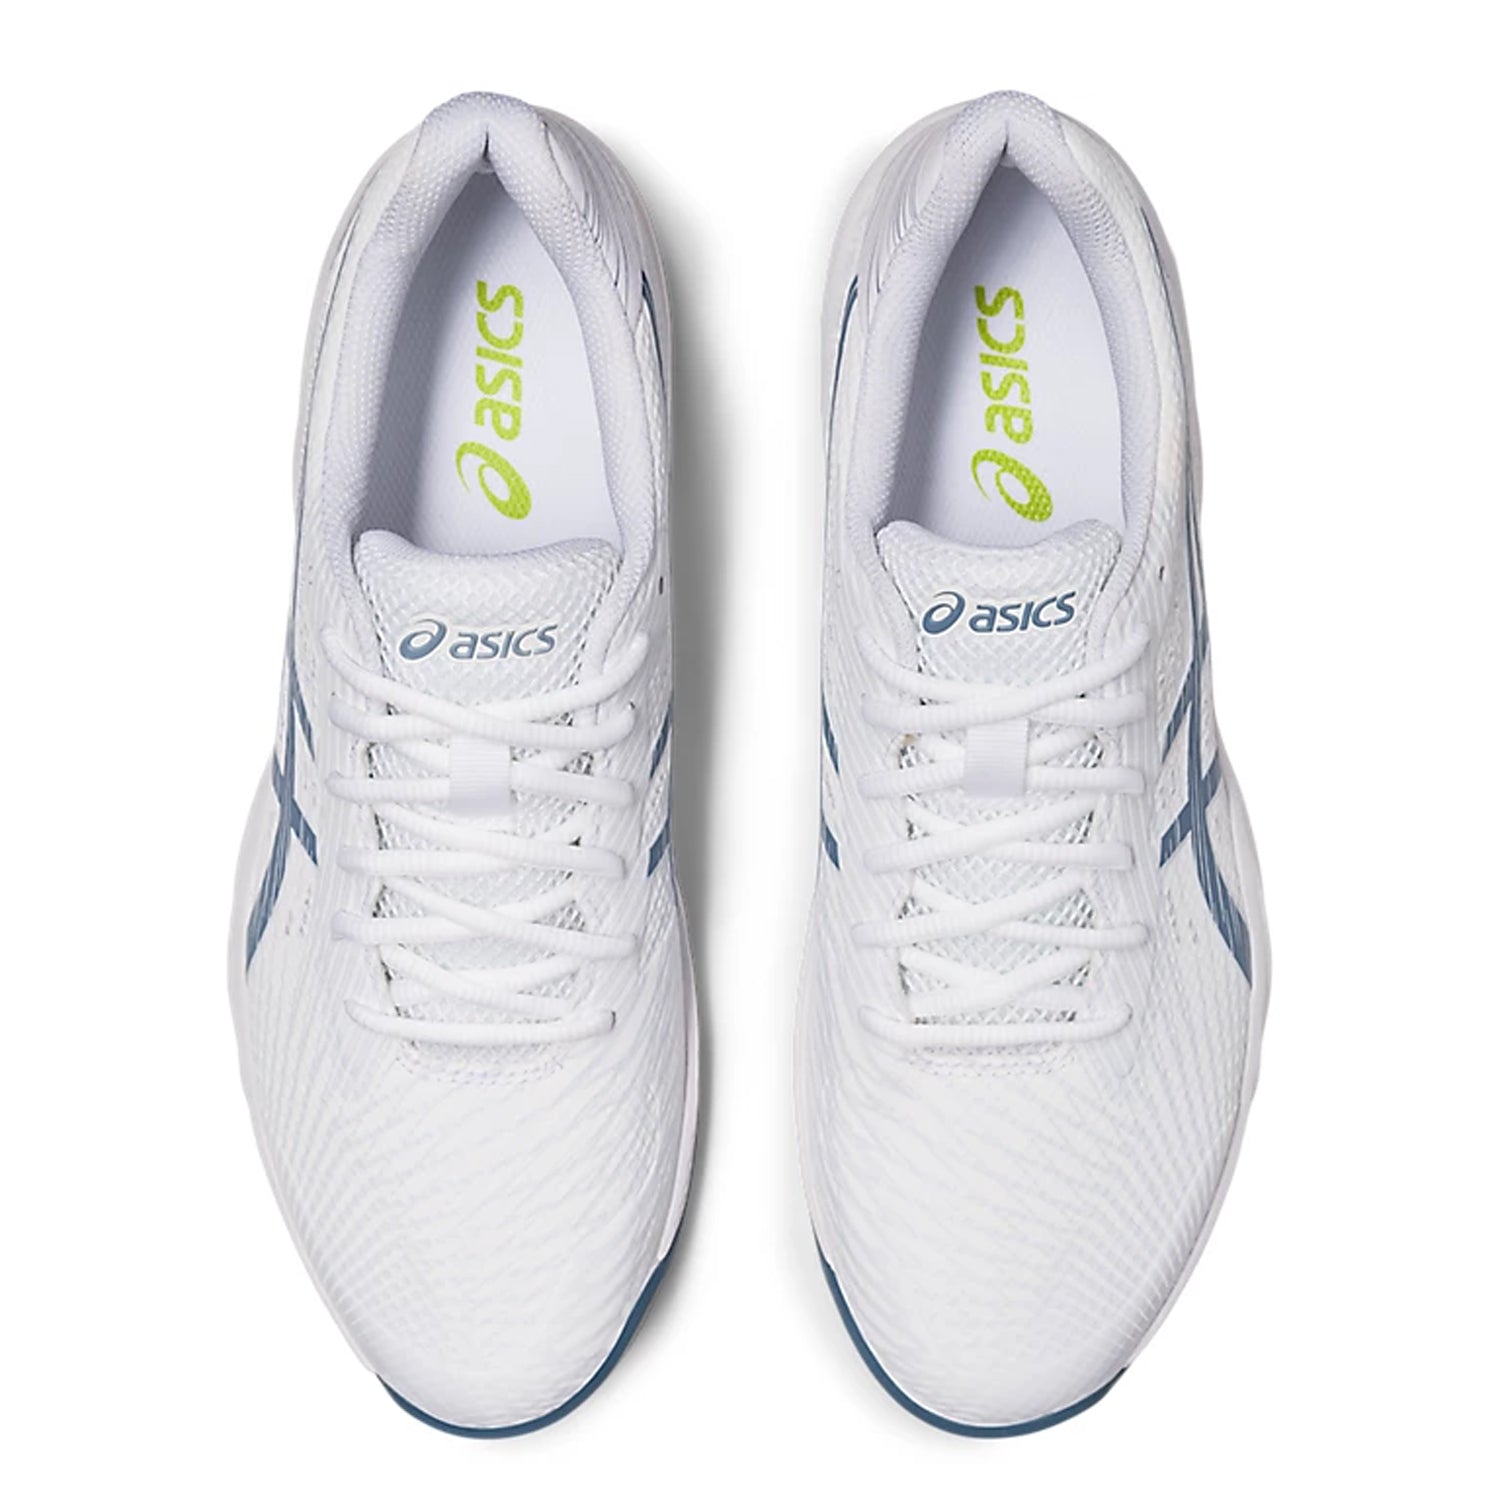 Asics GEL-GAME 9 Men's Tennis Shoes, White/Steel Blue - Best Price online Prokicksports.com